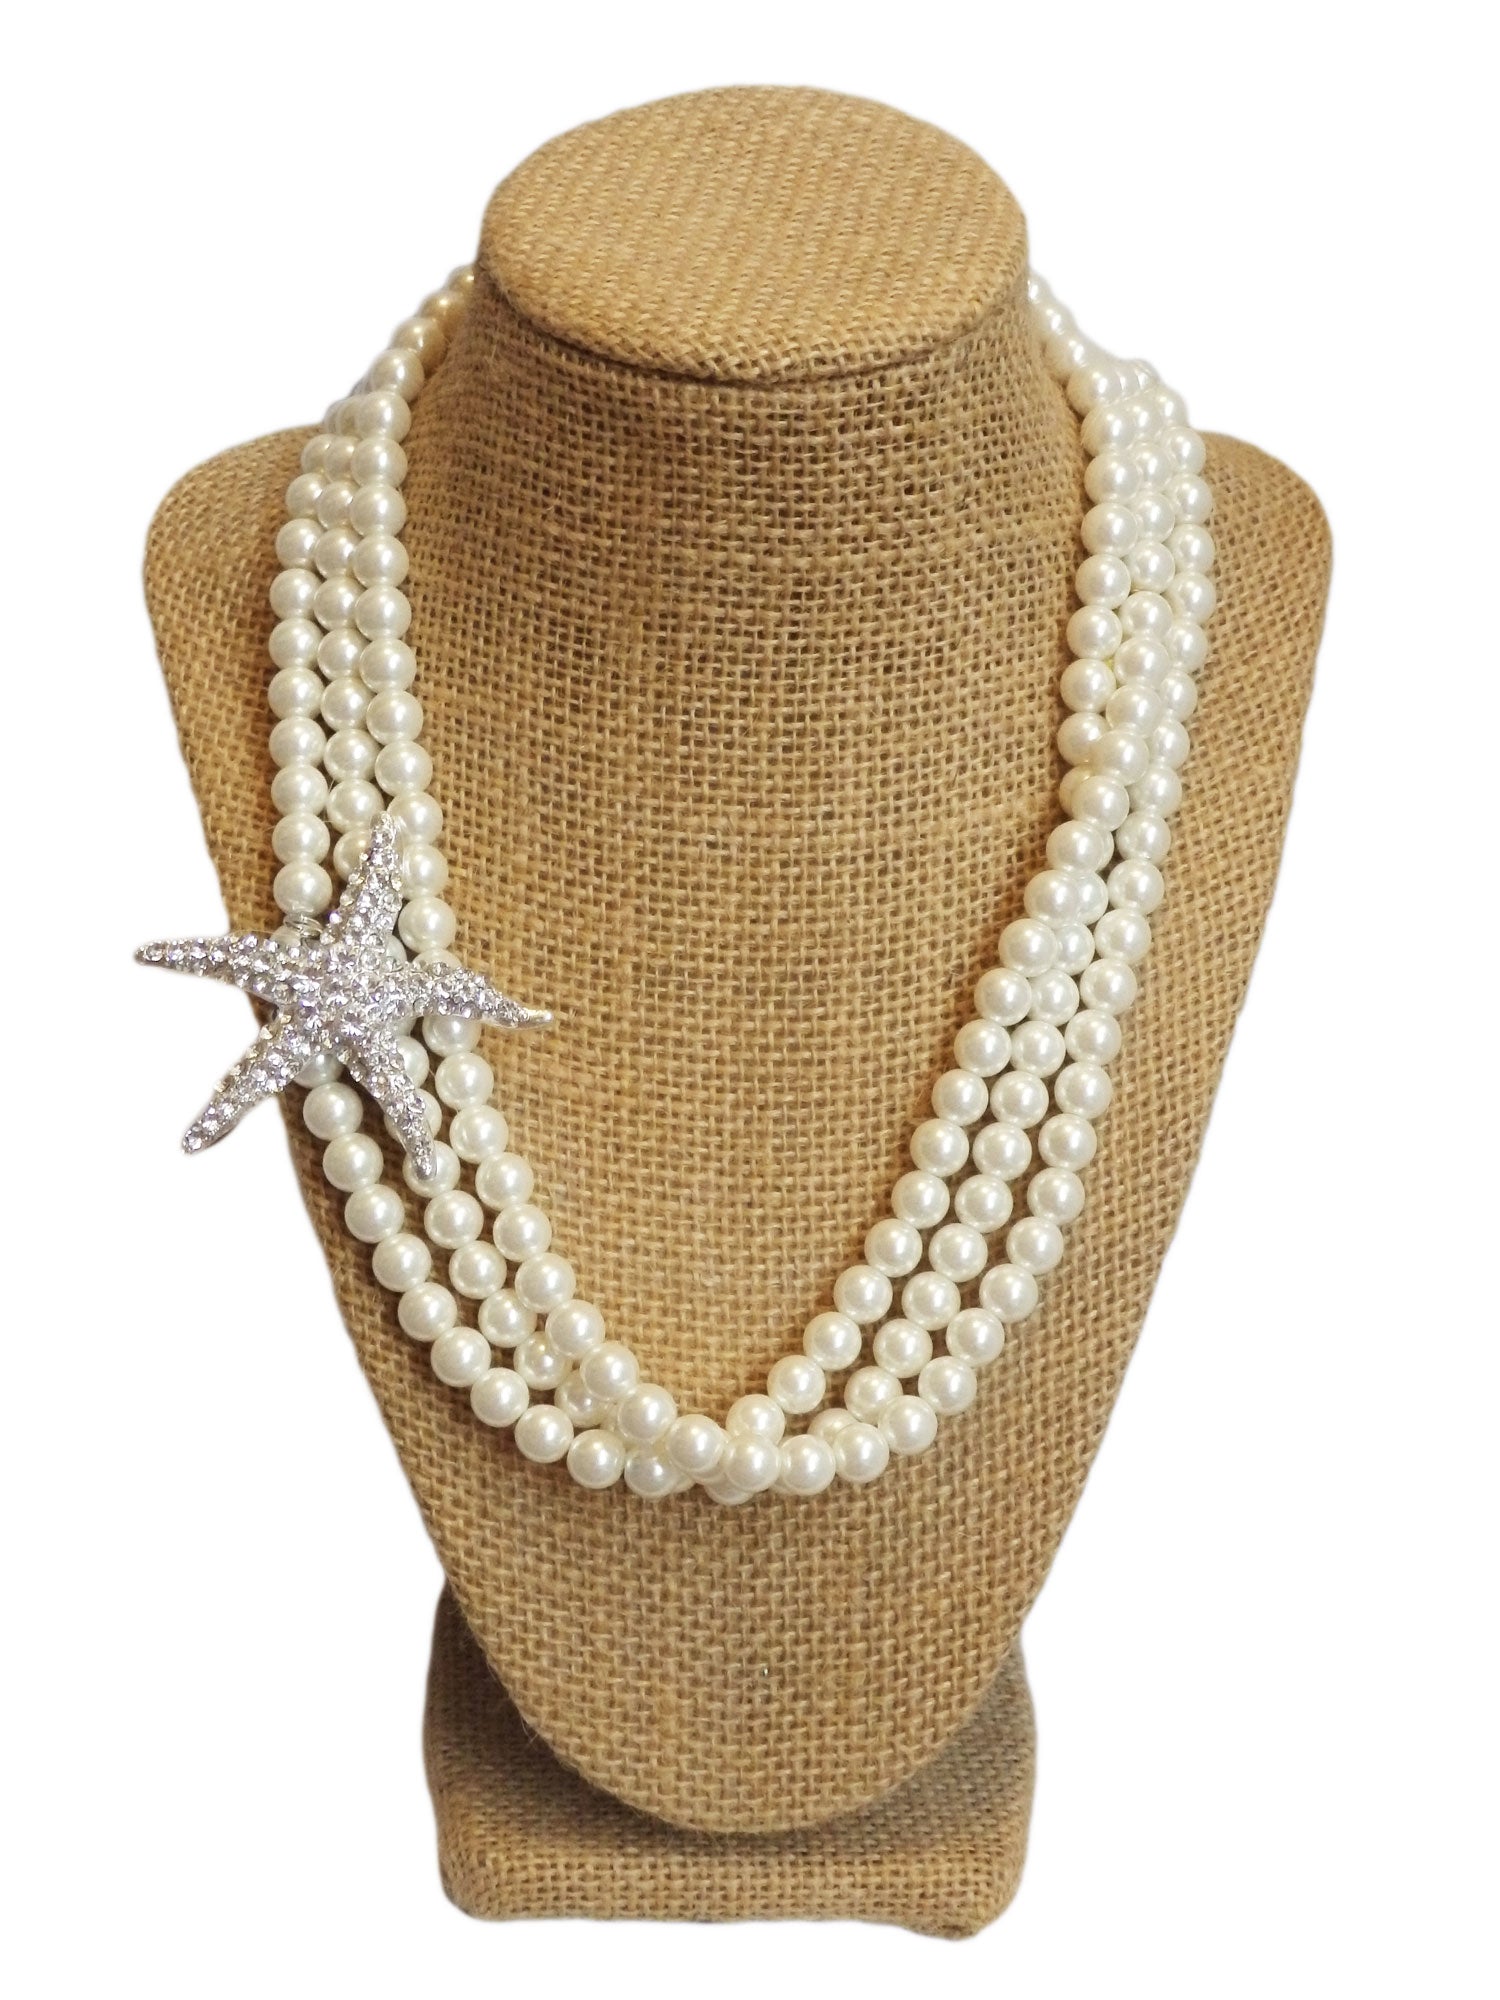 Buy Single Pearl Beaded Necklace, Dainty Beaded Choker, Beaded Pearl  Necklace, Seed Bead Necklace, Beach Choker, Beach Jewelry, Best Gift Ideas  Online in India - Etsy